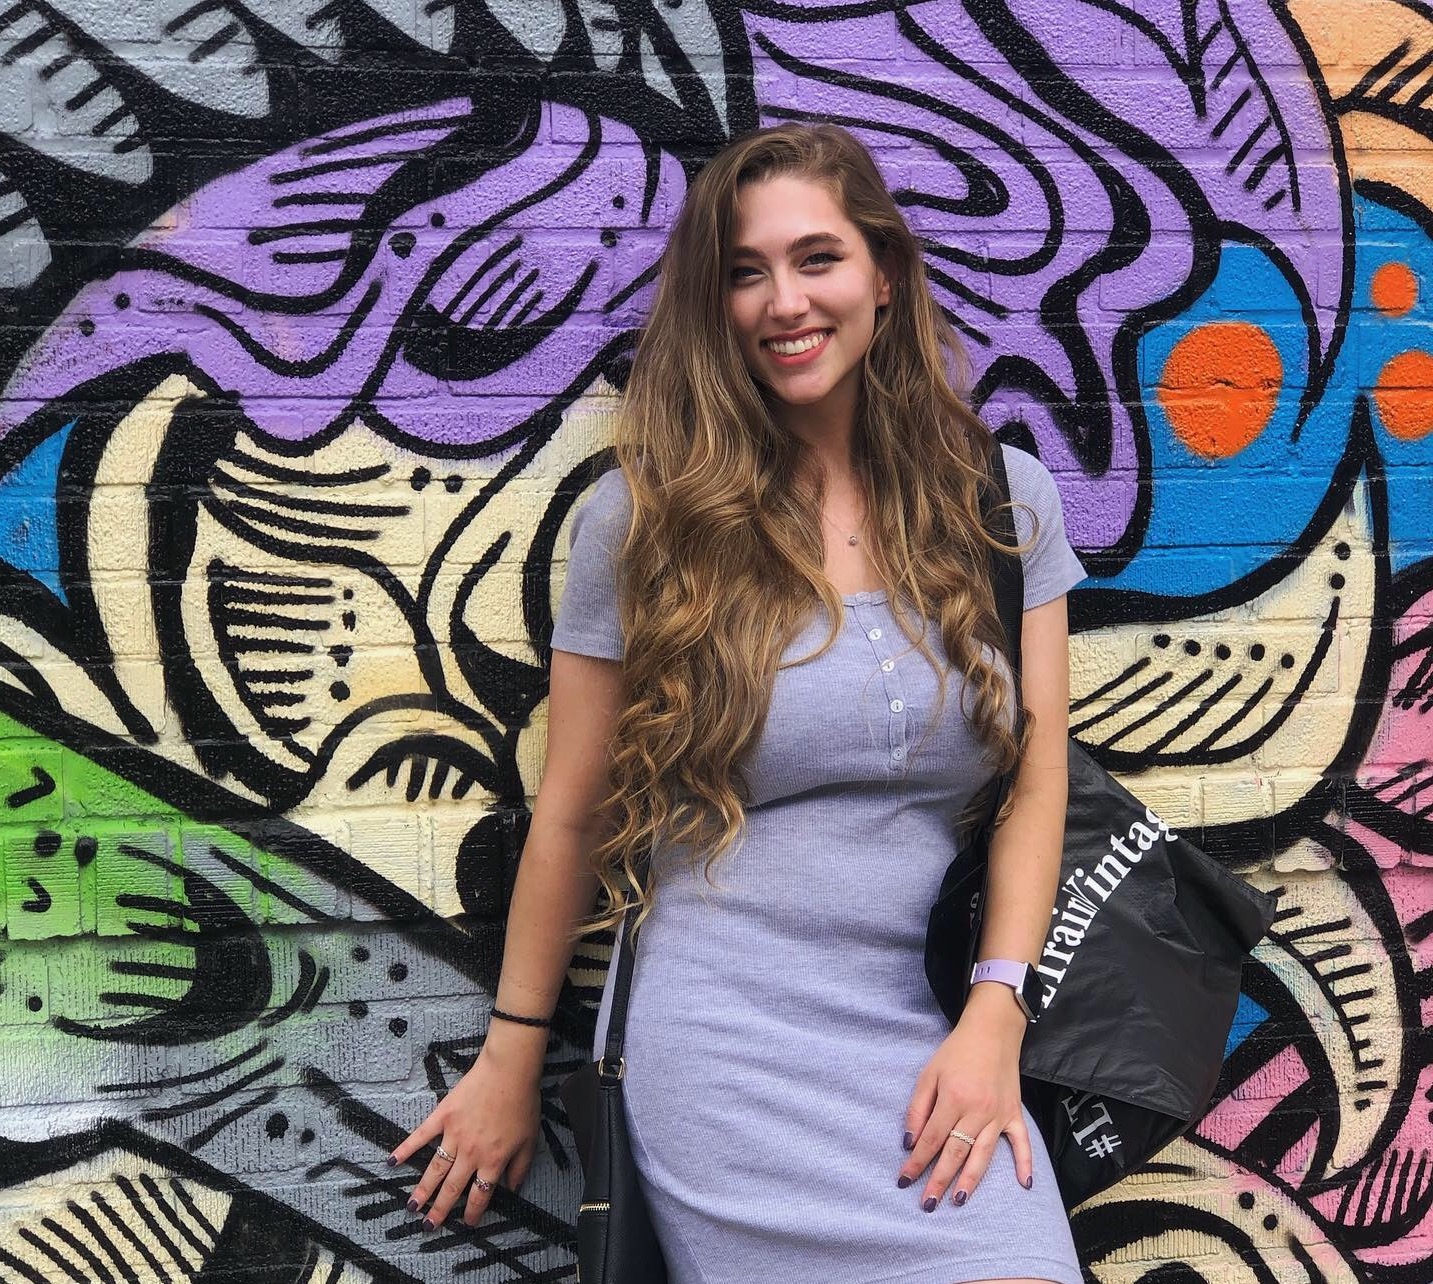 Alexis poses against a colourful wall mural in Atlanta, Georgia